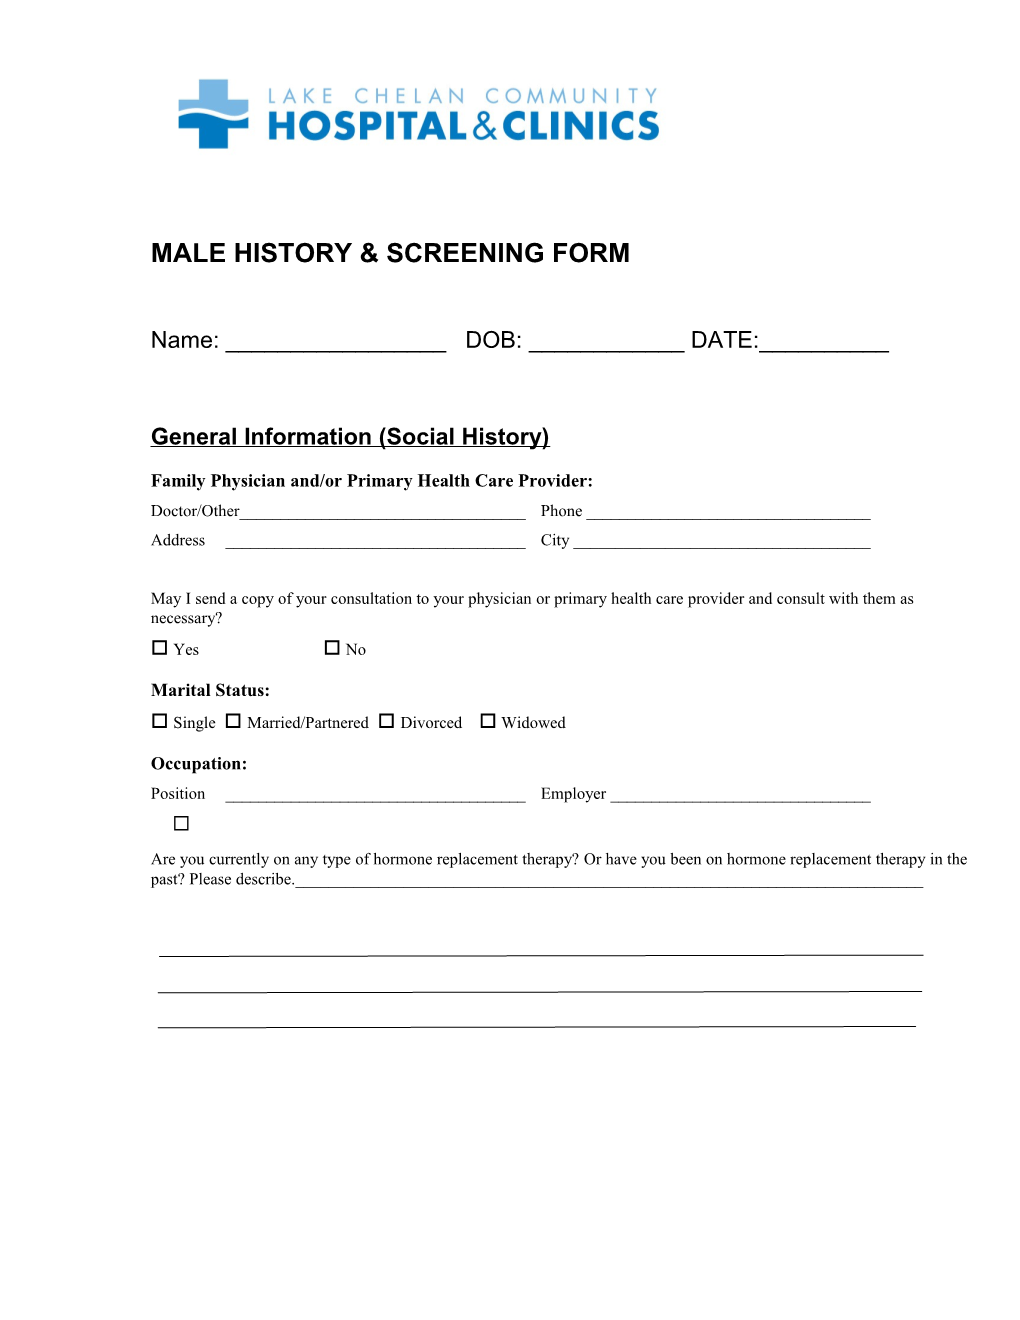 Male History & Screening Form